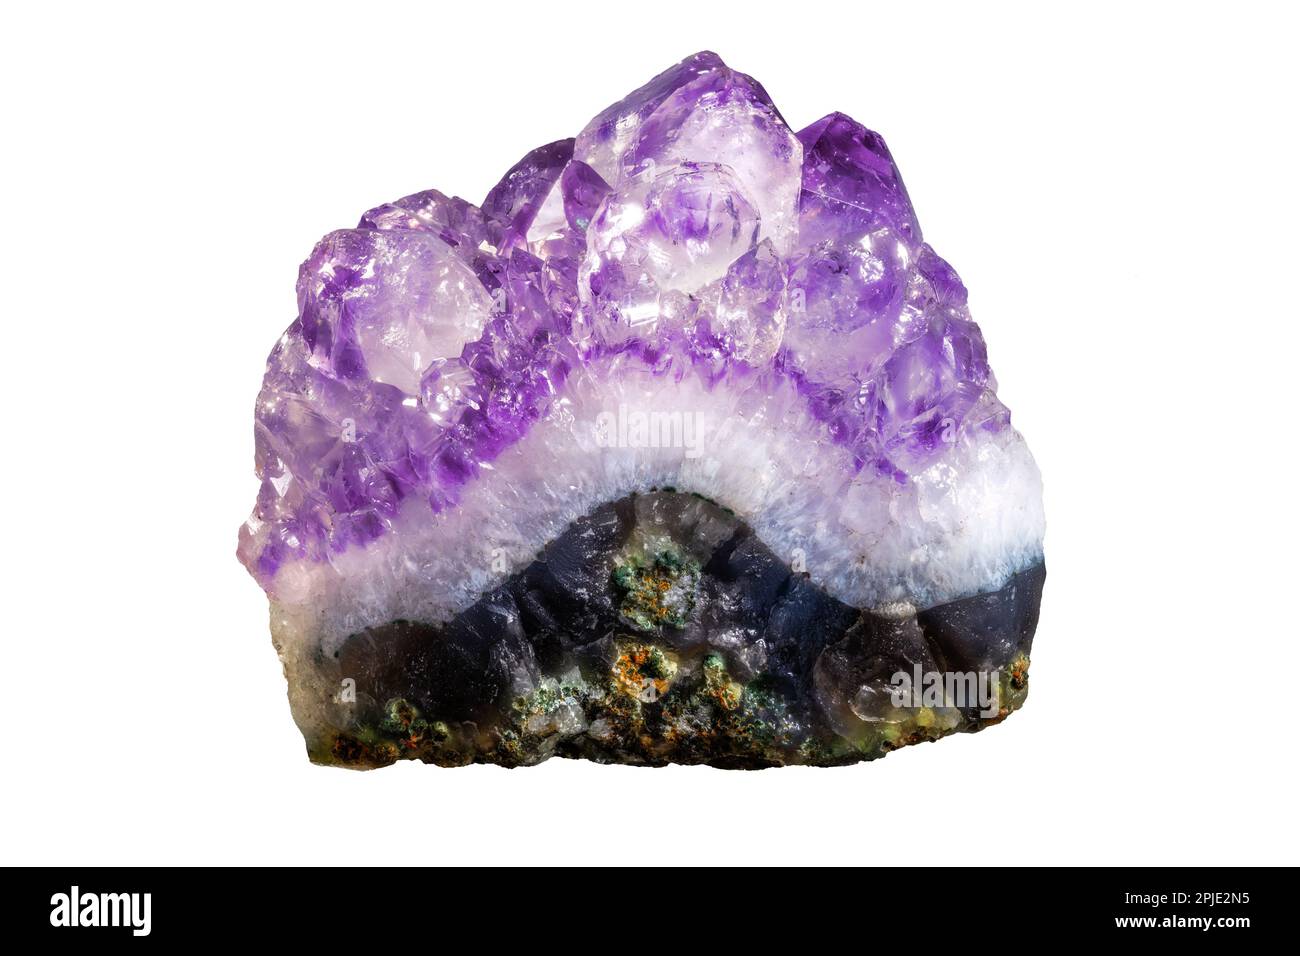 Closeup of an psolated purple amethyst crystal stone Stock Photo